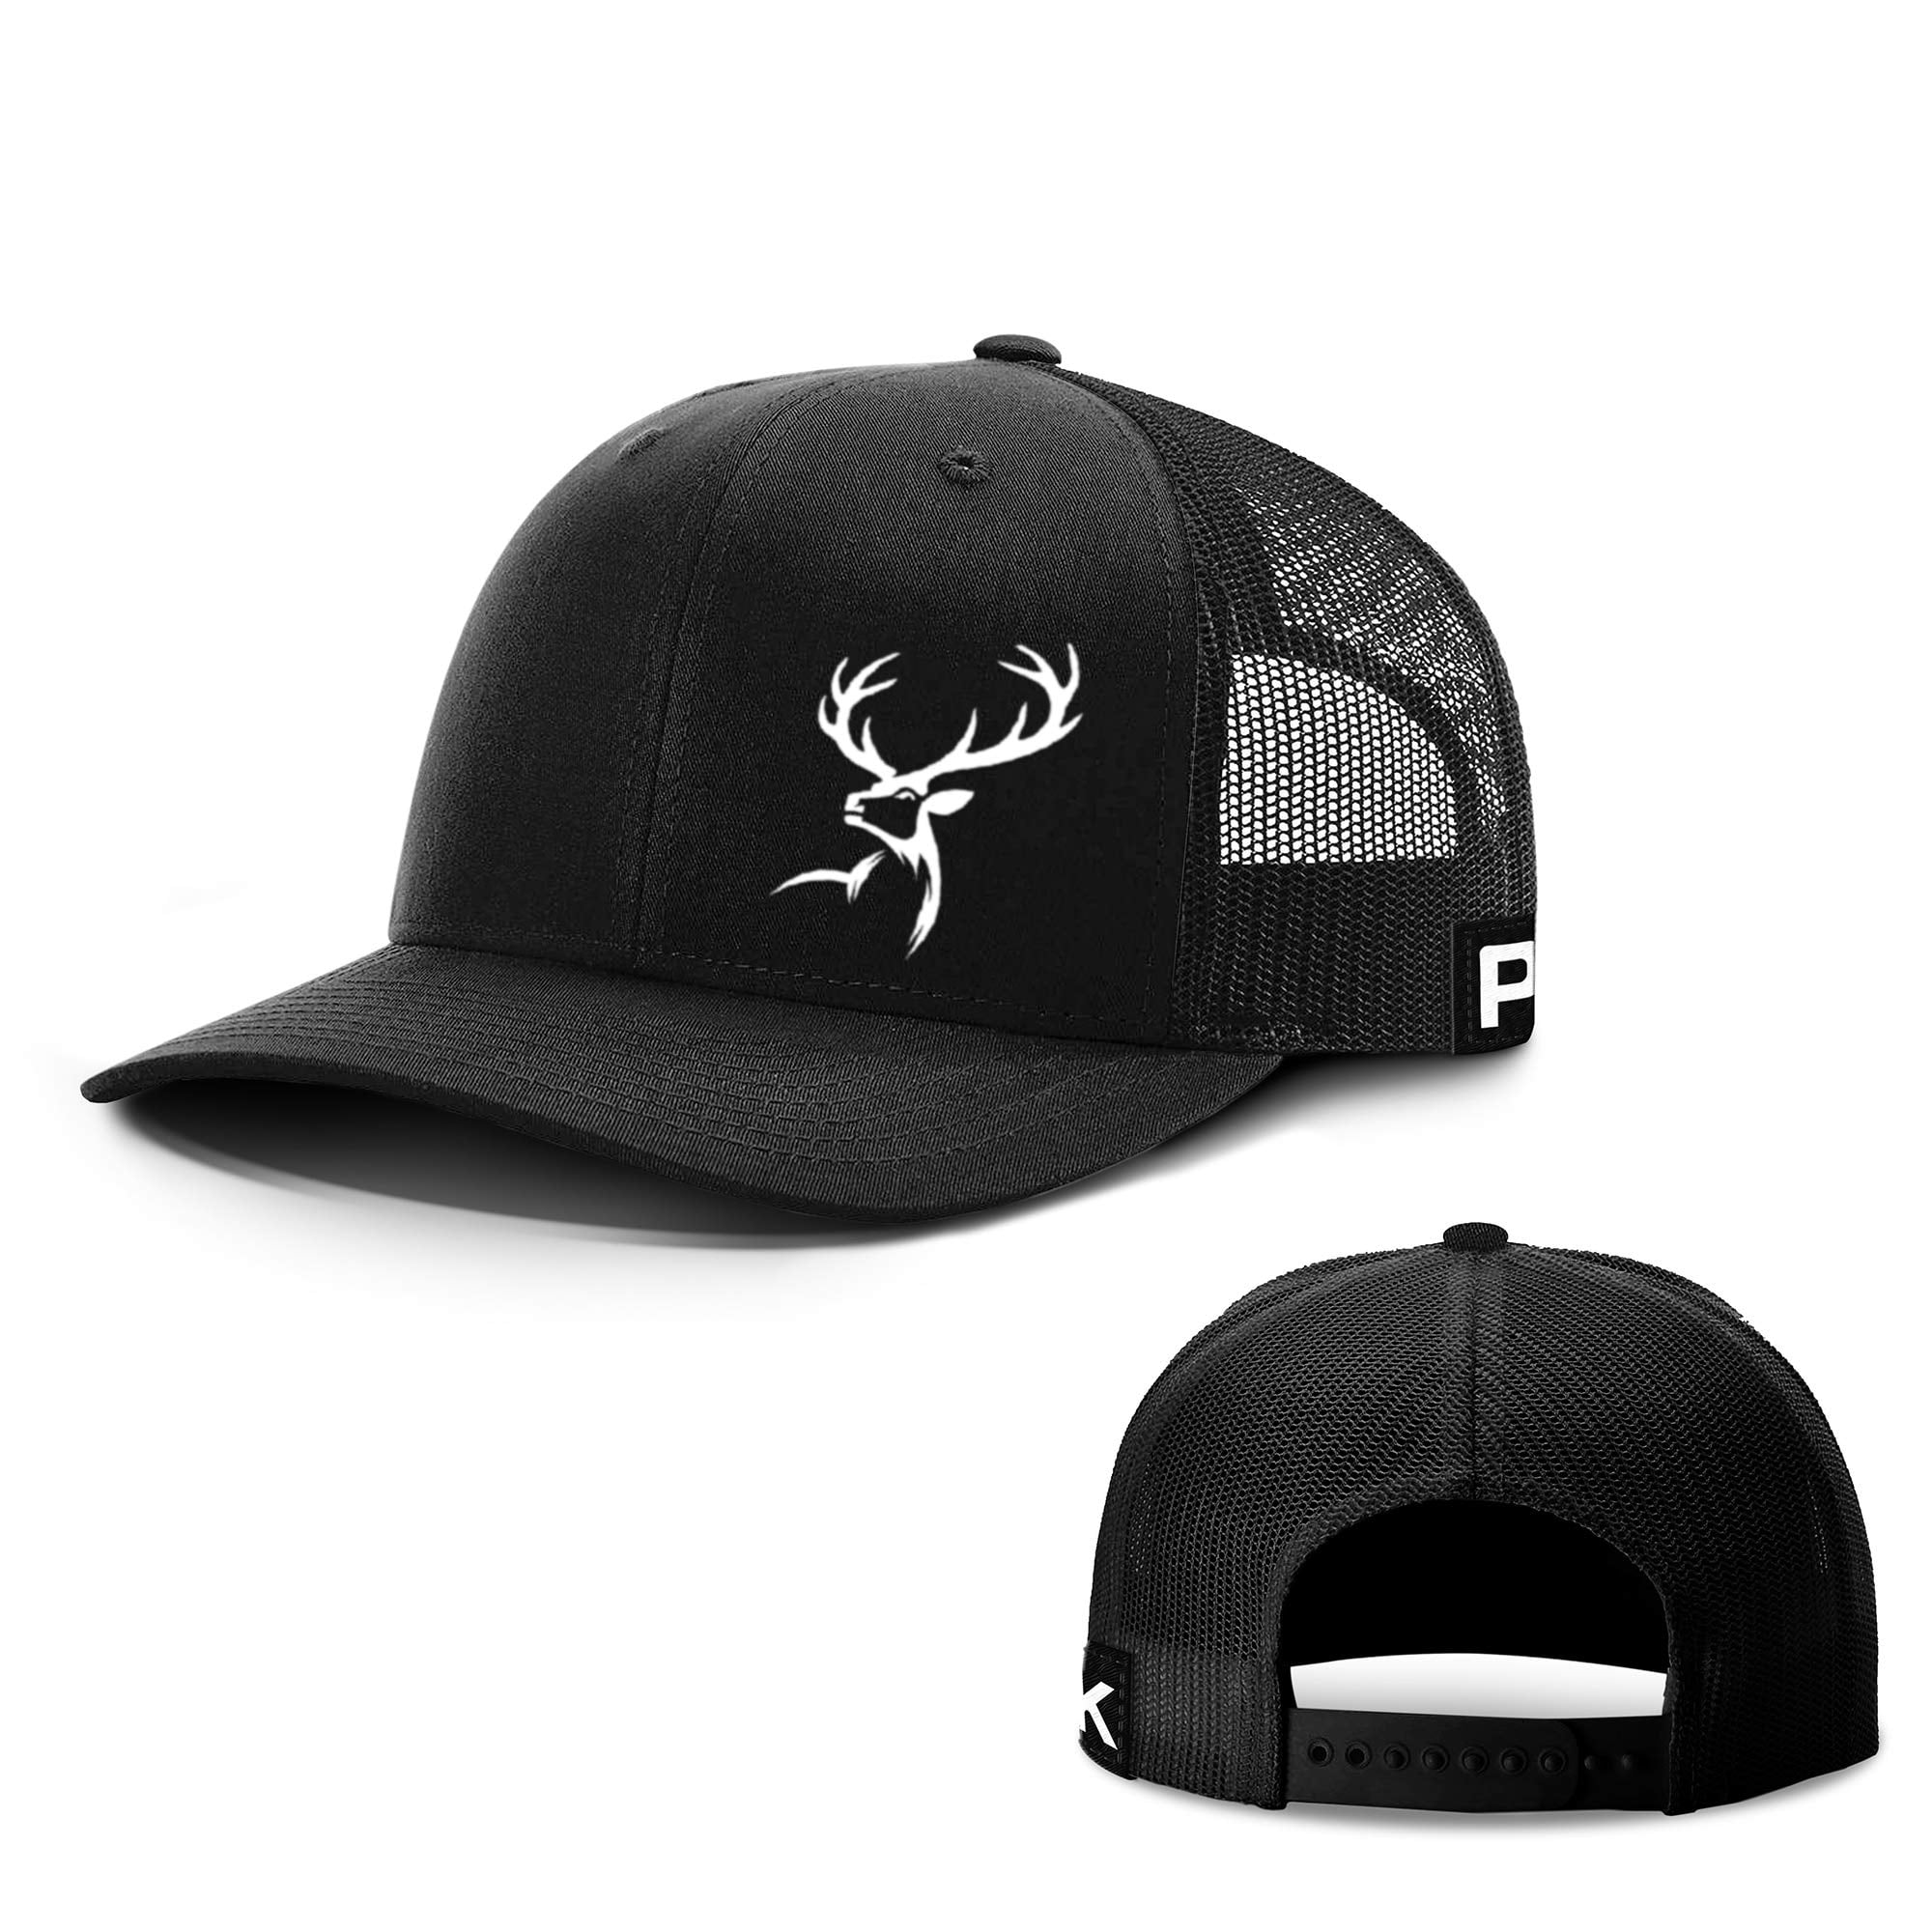 Baseball Printed Hunting Unisex Charcoal Deer Cap & Adult - Kicks Black Hat Snapback